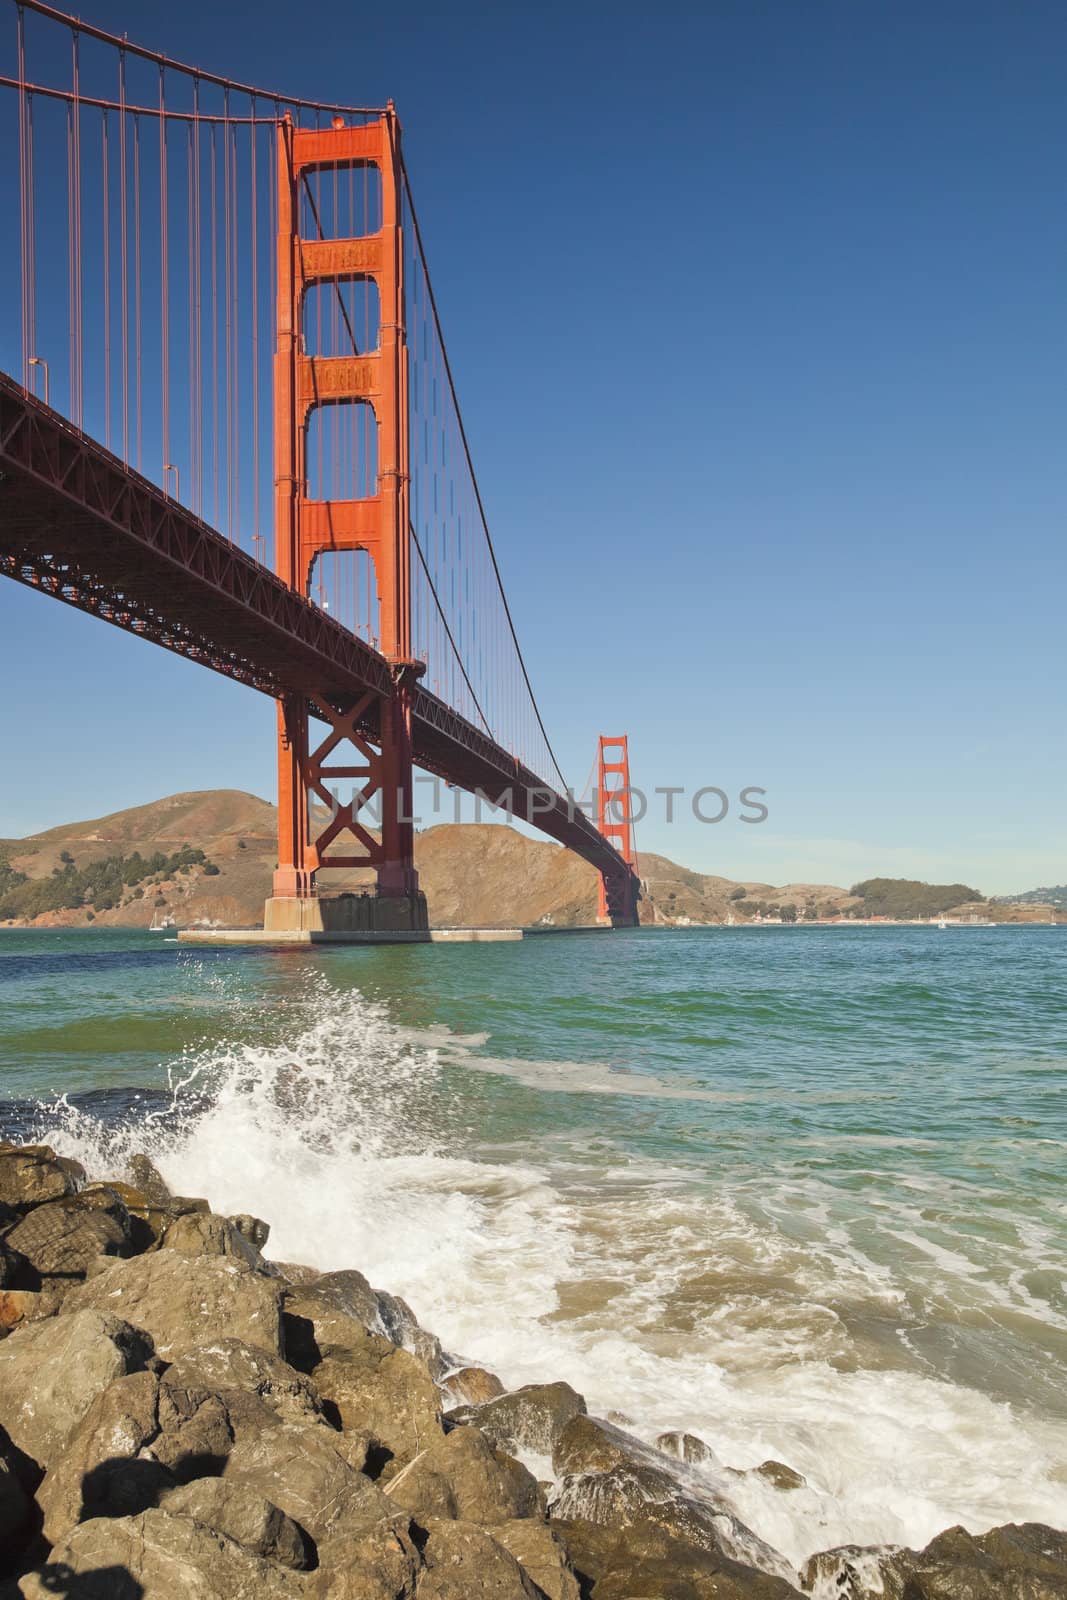 The Golden Gate Bridge in San Francisco bay